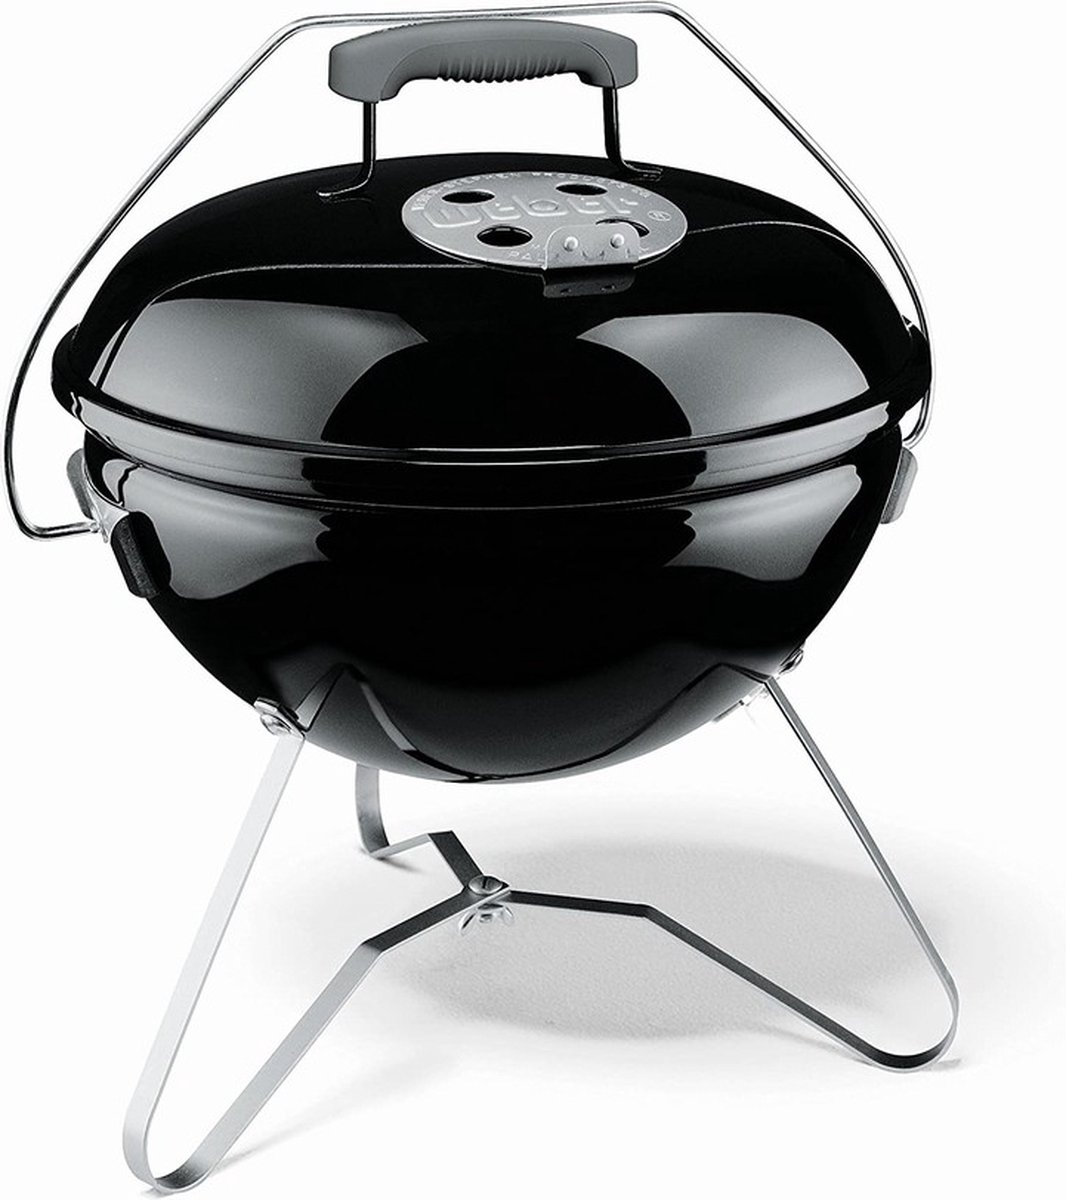 BBQ SMOKEY COMPACT - Barbecue fumoir au charbon, compact et portable -  Create